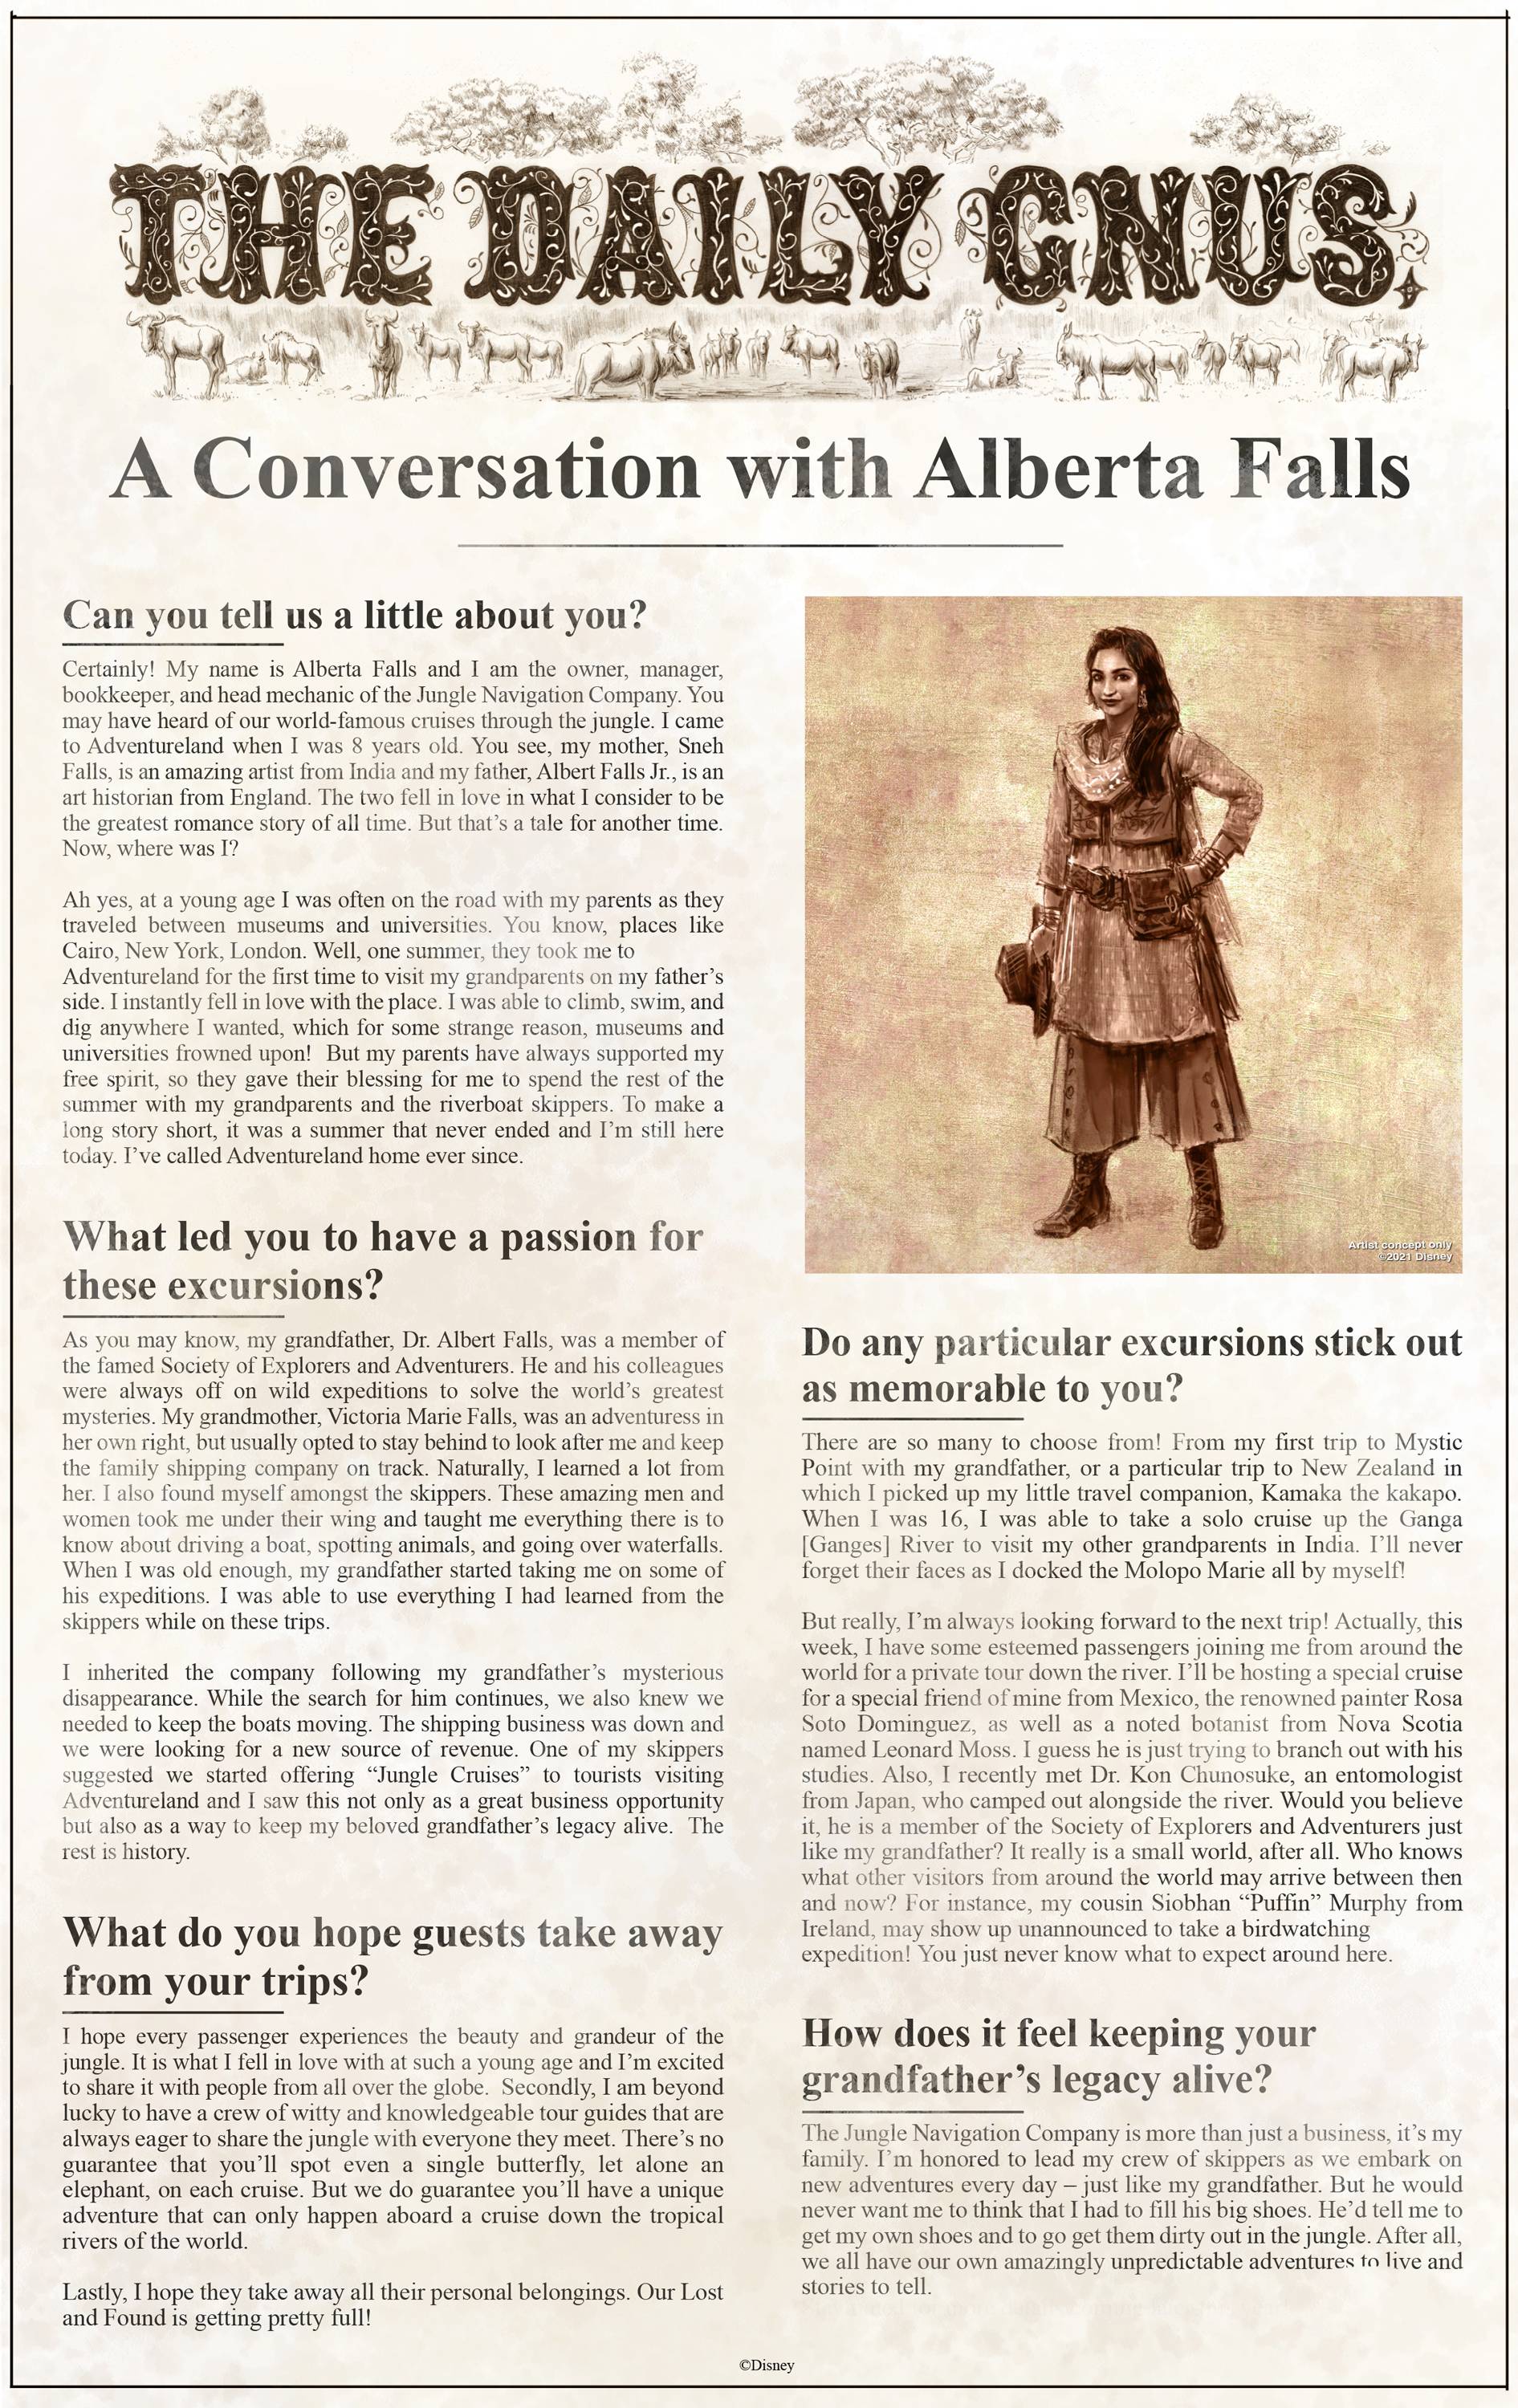 A conversation with Alberta Falls